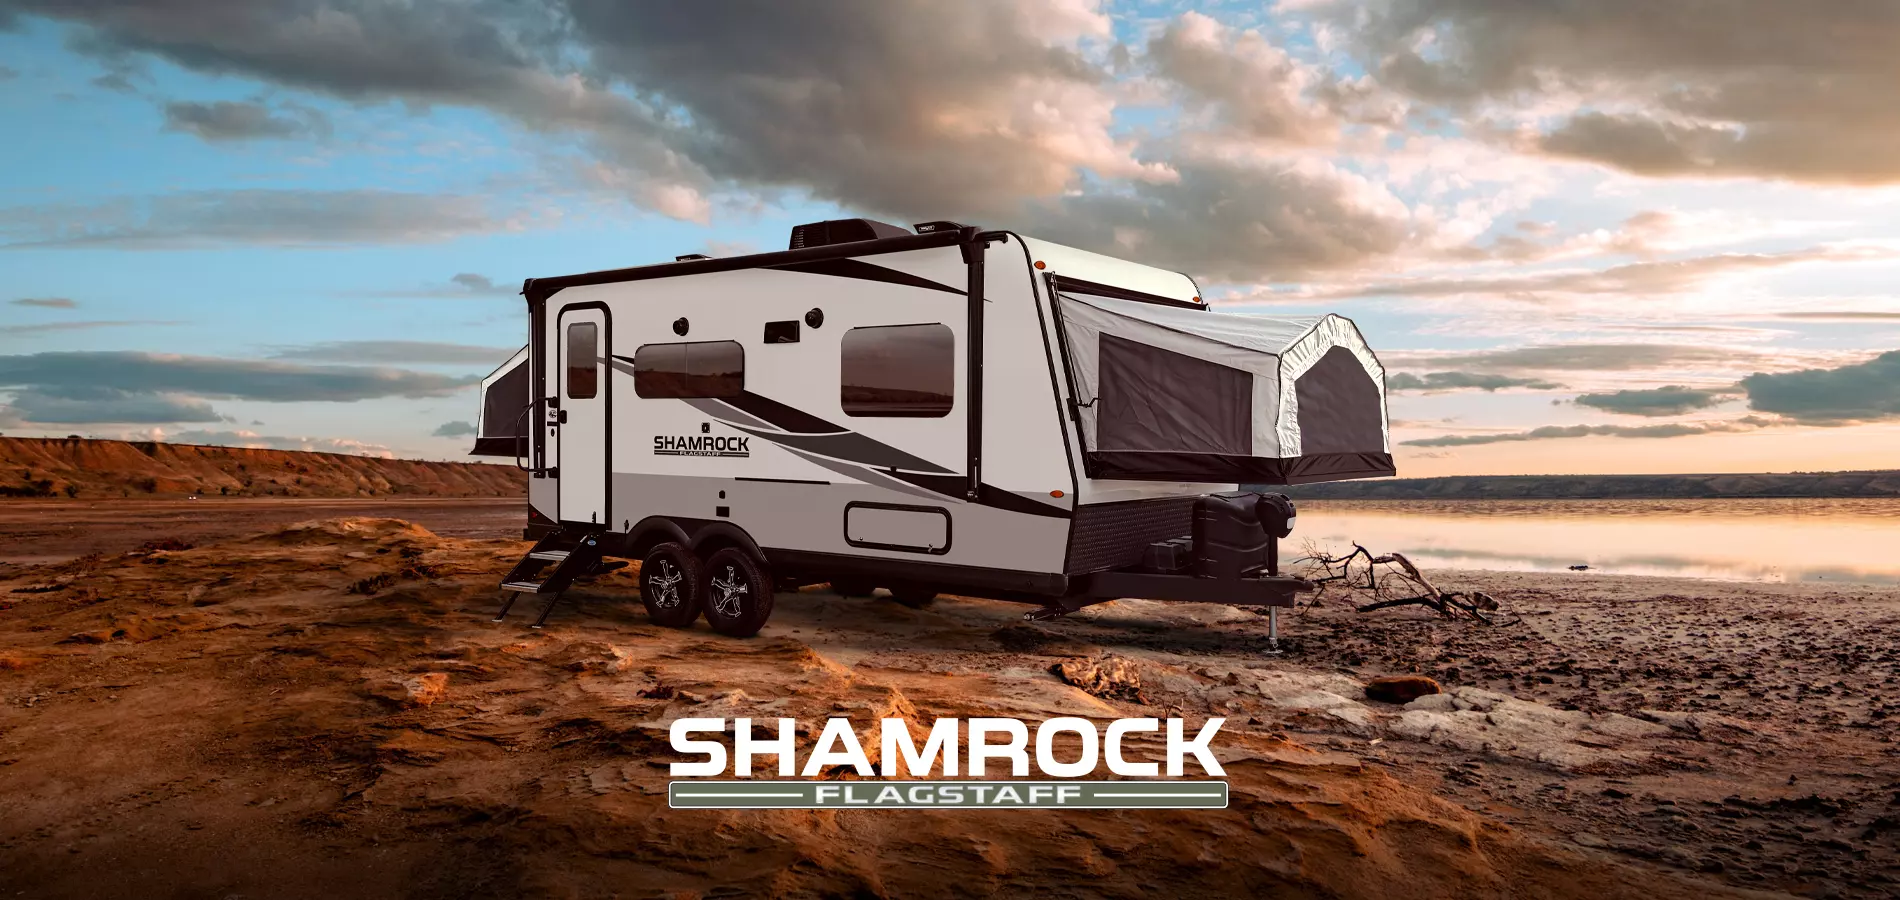 Flagstaff Shamrock RVs